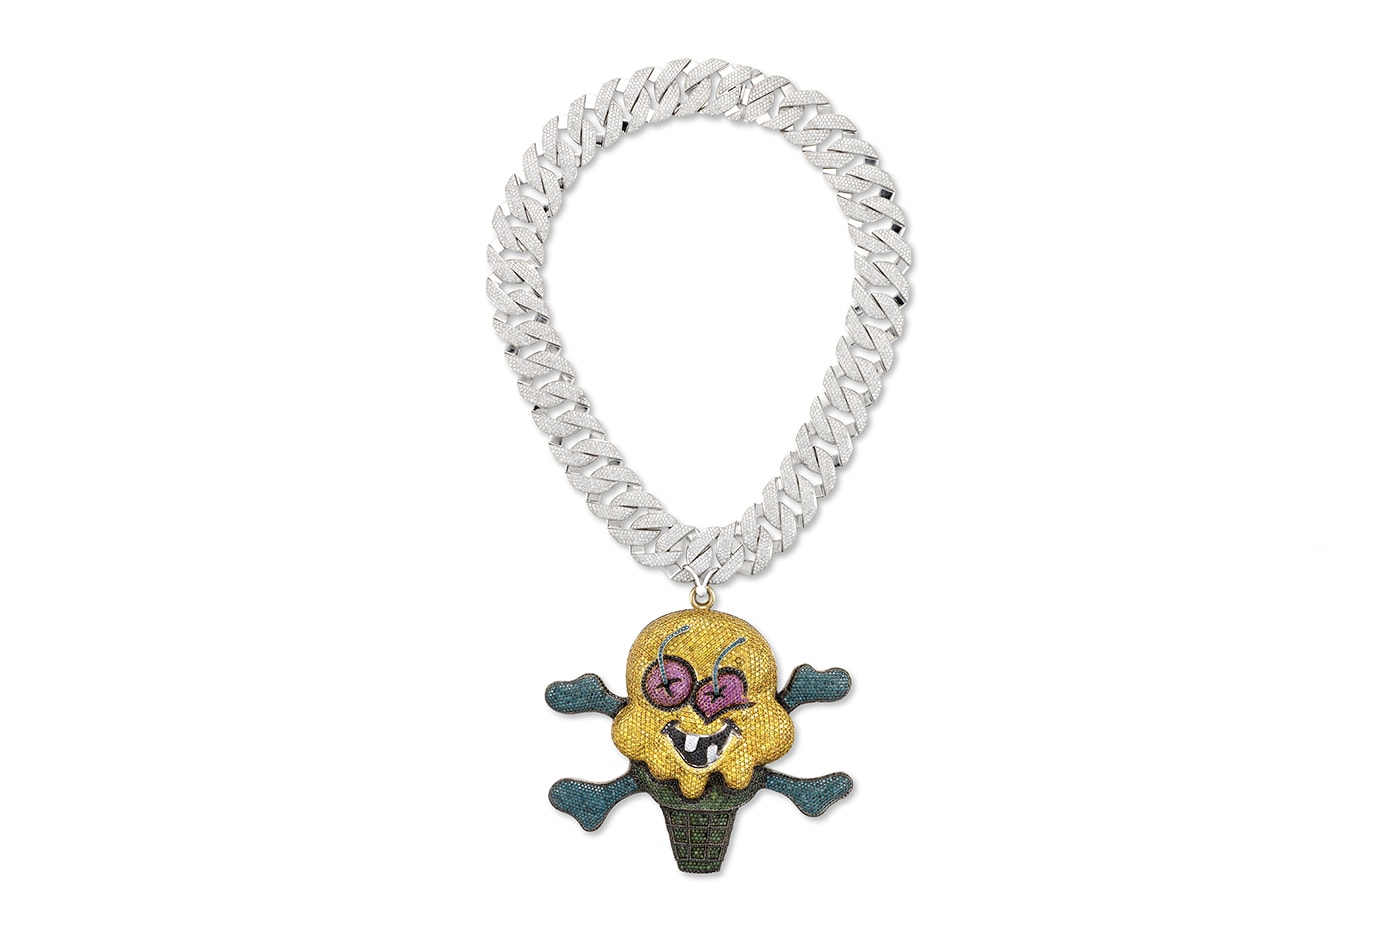 Custom Nigo Vintage Bape Pendant & Necklace with Matching Chain